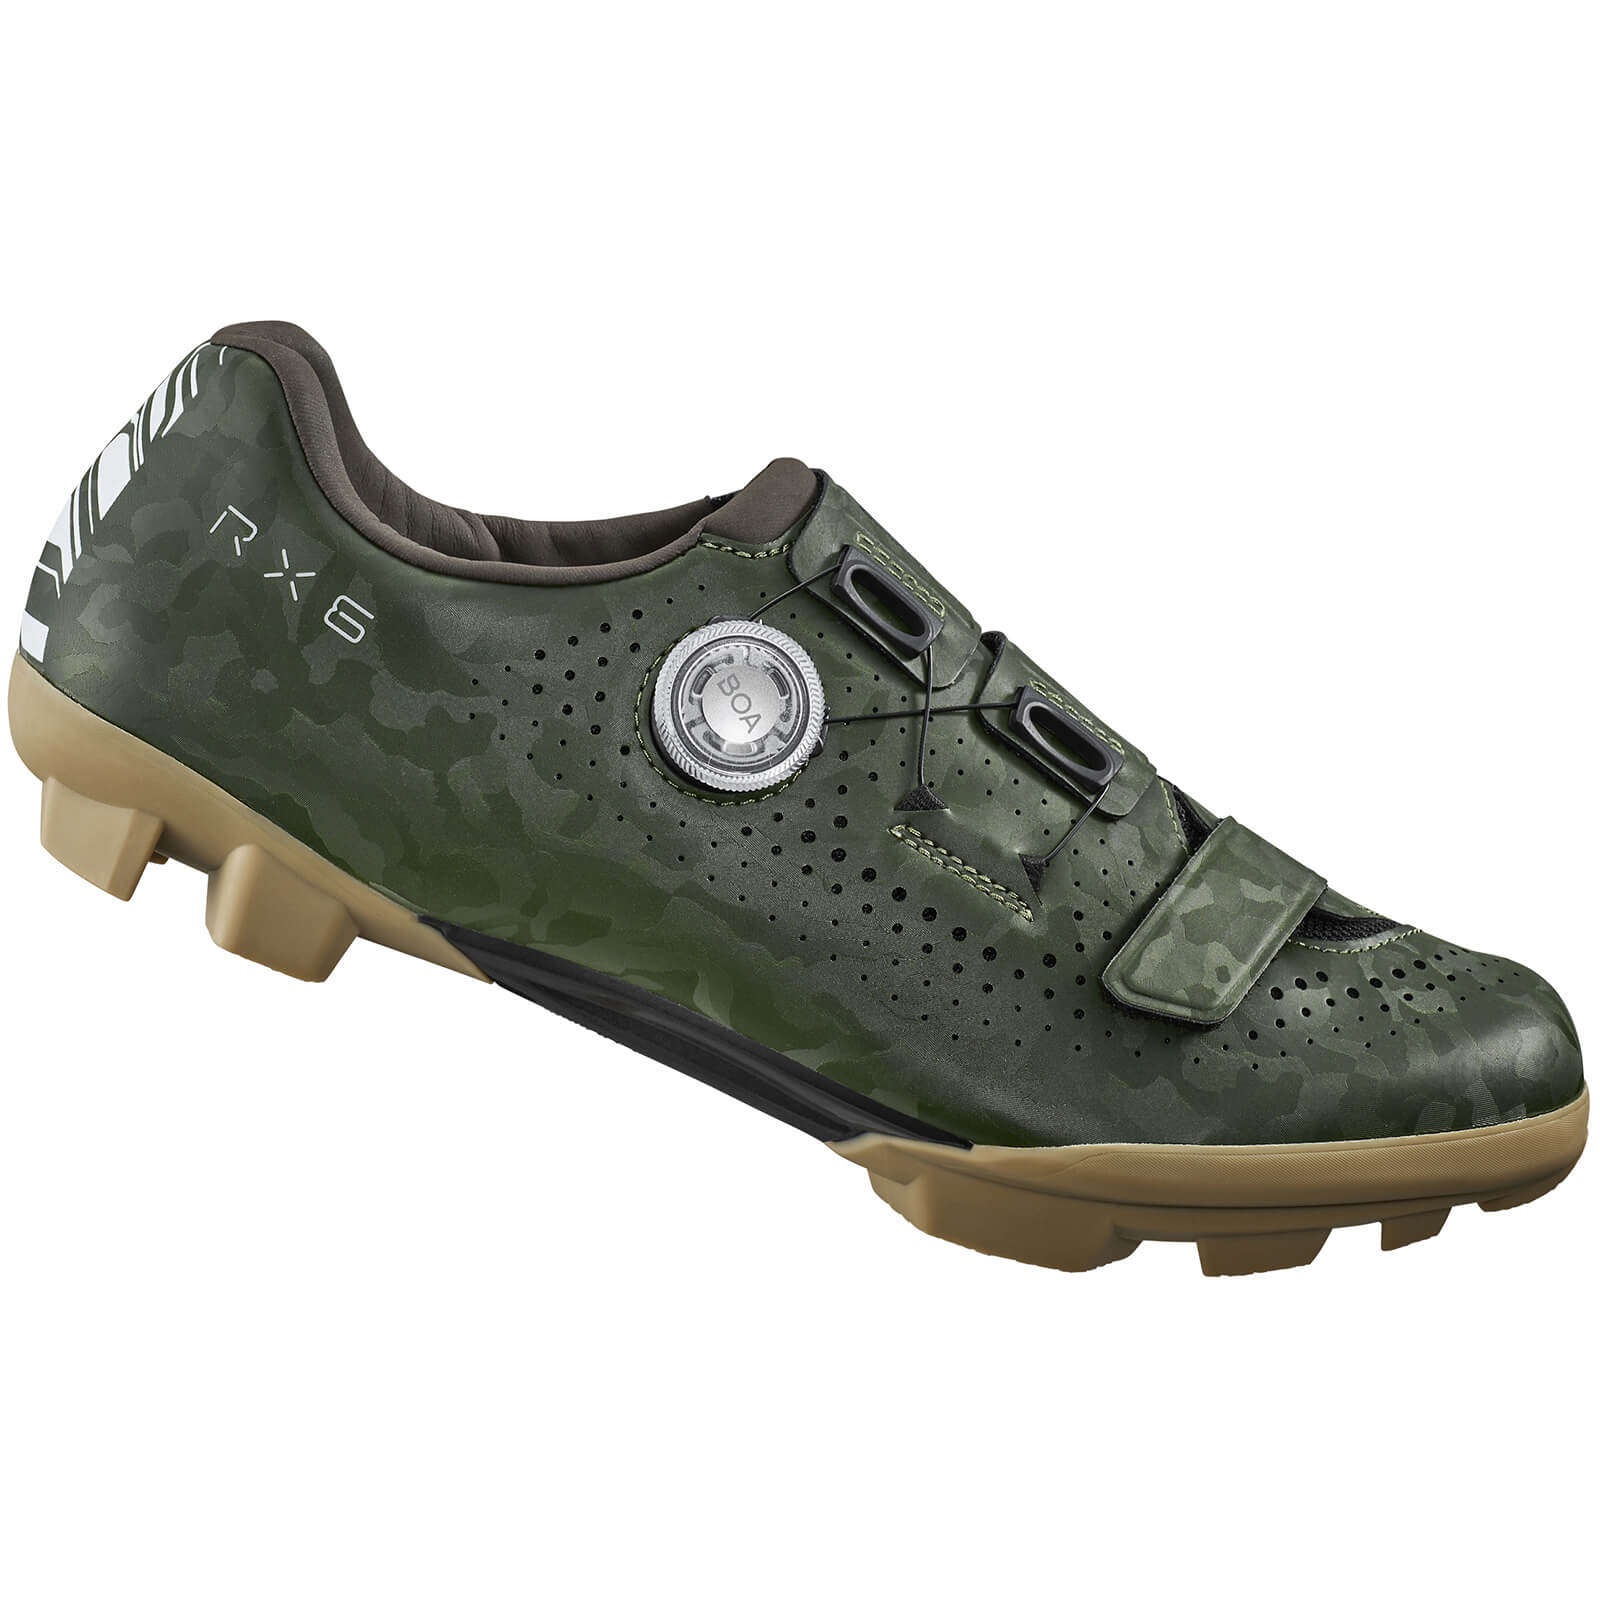 Shimano RX600 Gravel Cycling Shoes - 45 - Green